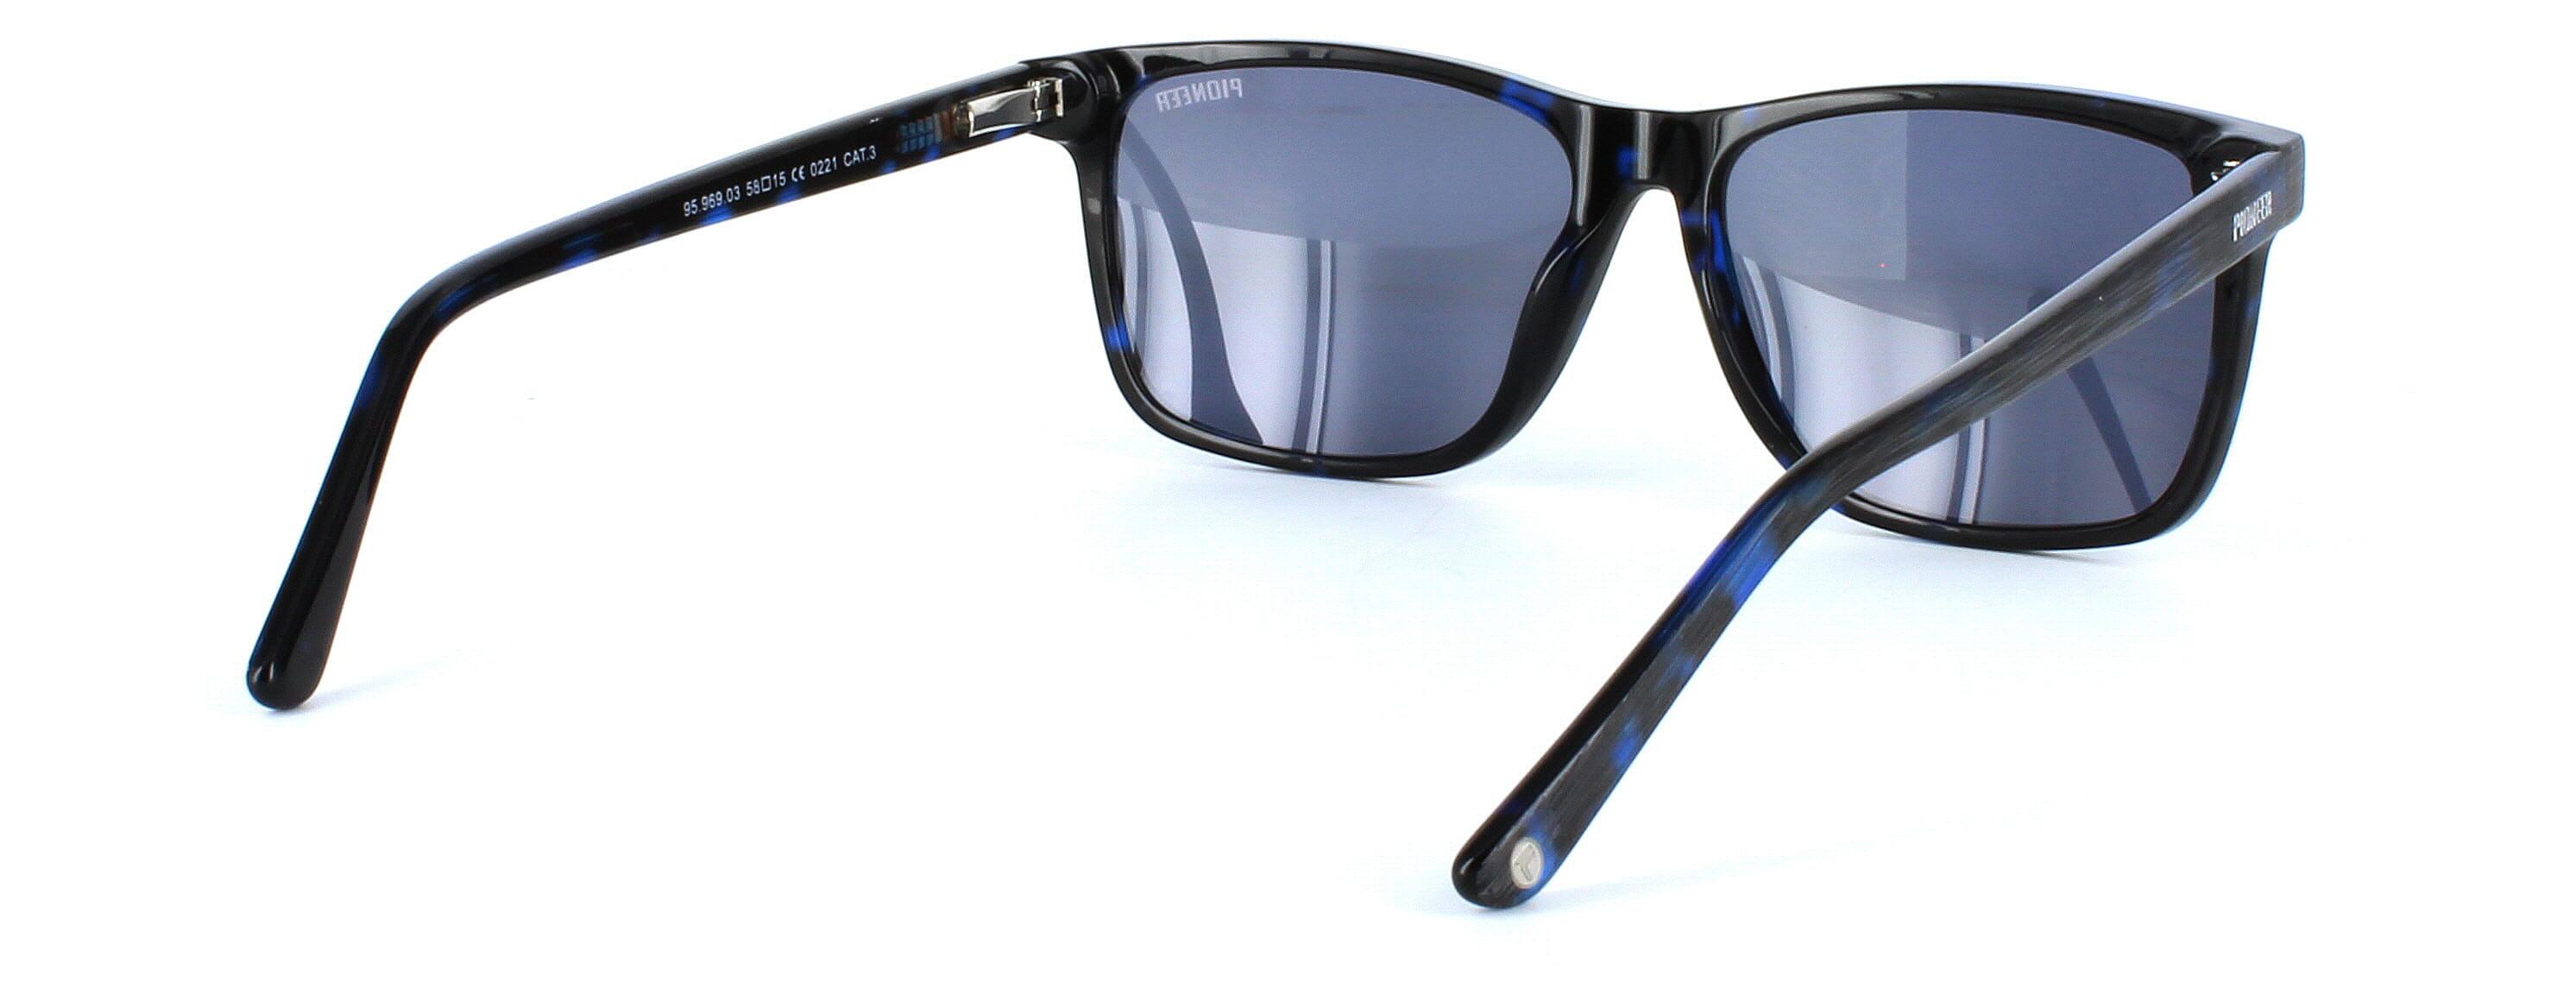 Angelo - Matt gunmetal with blue blotch unisex plastic sunglasses - image view 4